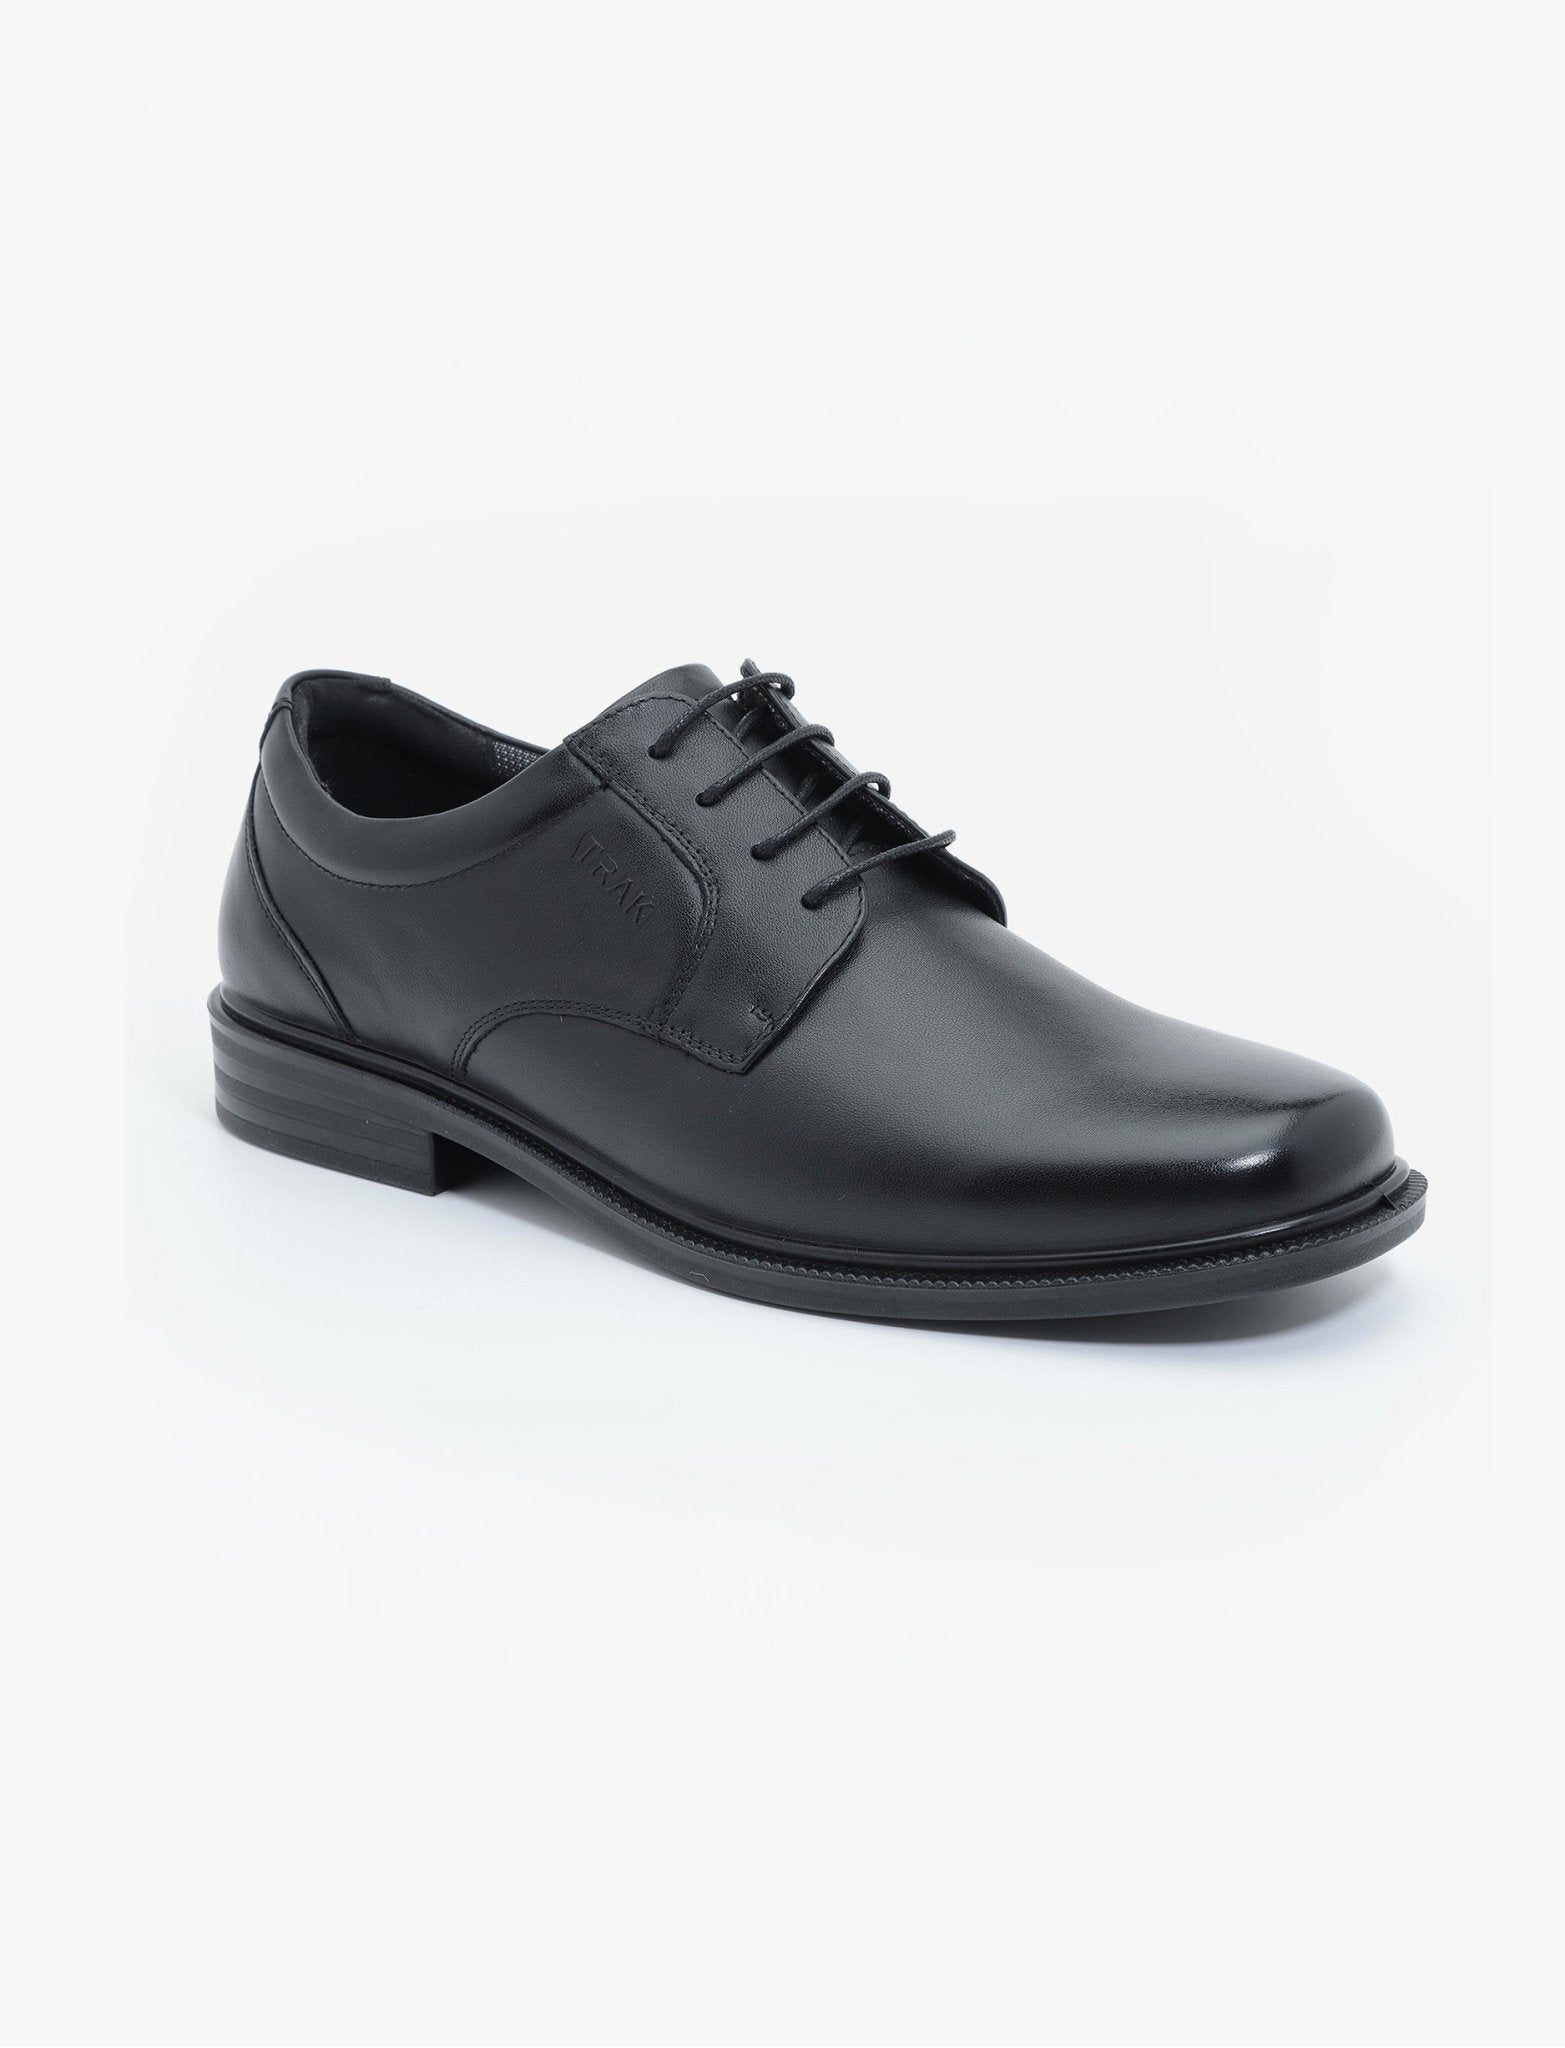 TRAK - נעלי עור אלגנטיות לגבר בצבע שחור - MASHBIR//365